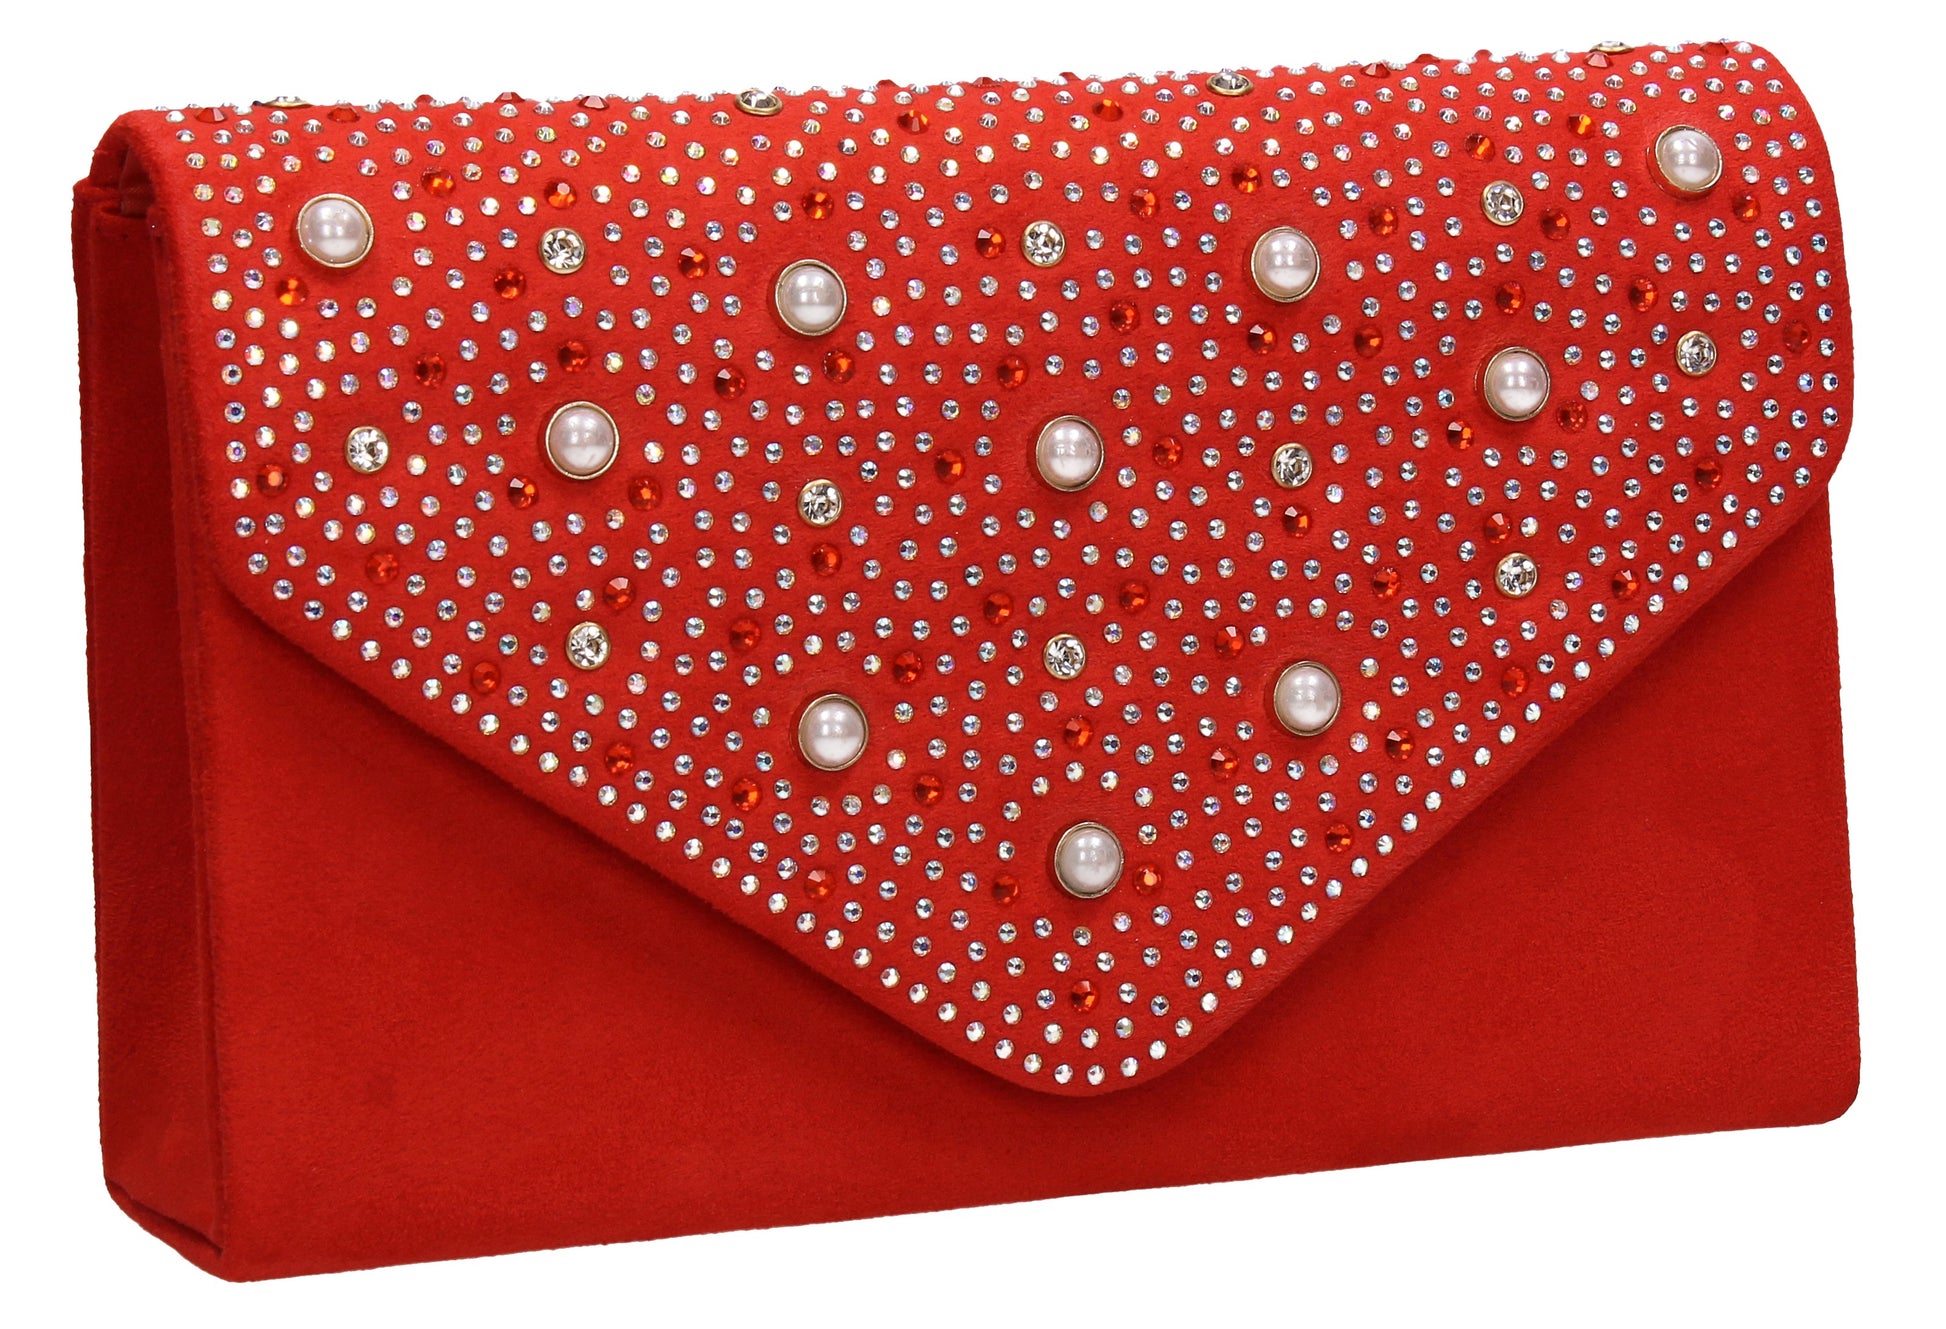 SWANKYSWANS Laurel Clutch Bag Scarlet Orange Cute Cheap Clutch Bag For Weddings School and Work